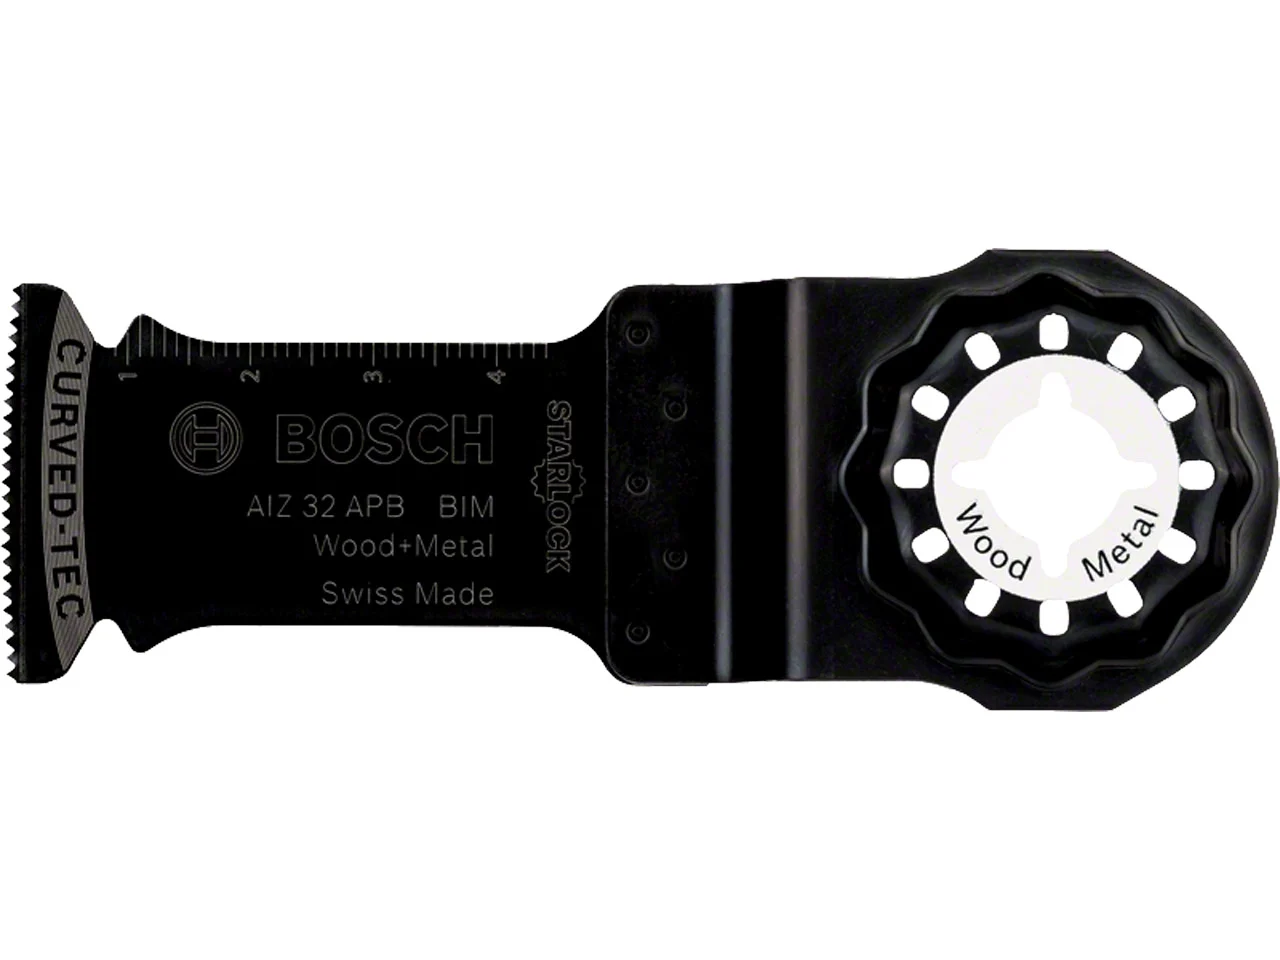 Bosch GOP12V-28 12v Brushless Cordless Multi-Cutter Bare Unit with